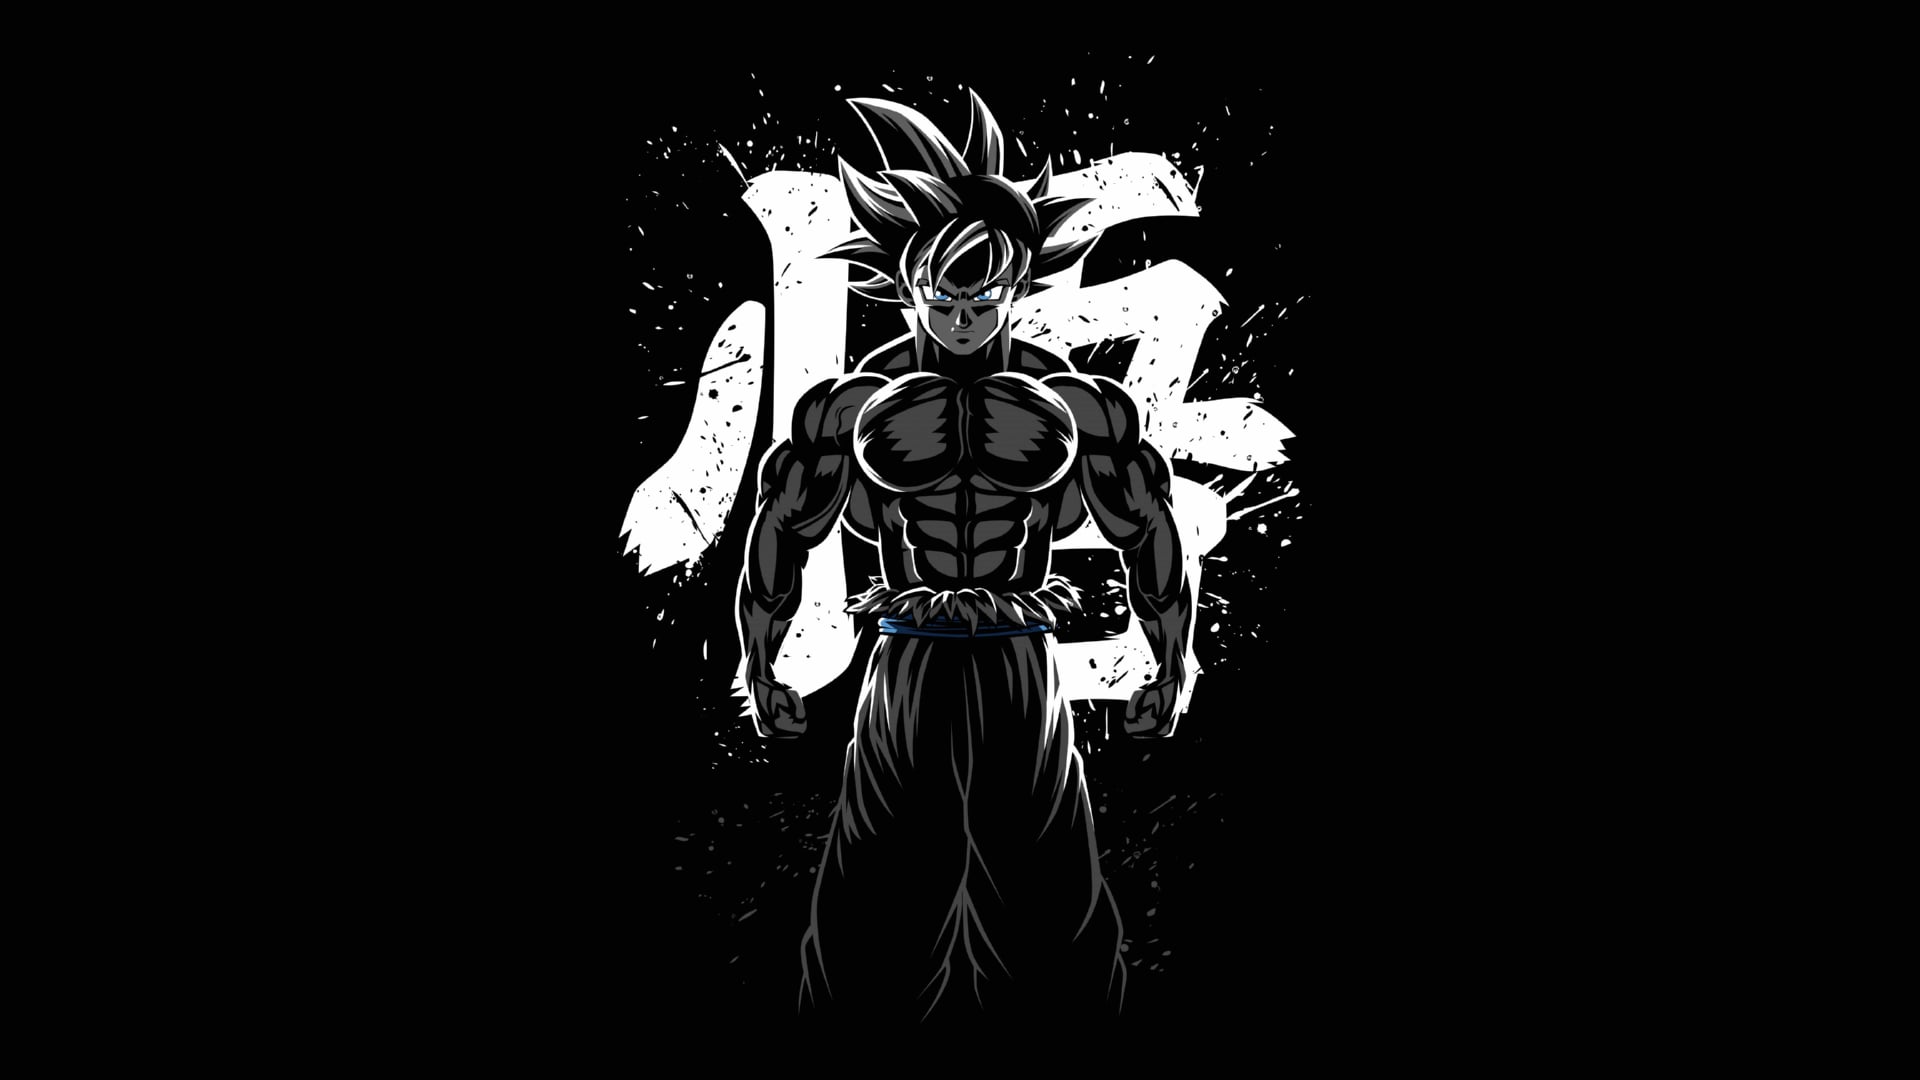 Digital Art Goku Musculoso wallpapers HD quality